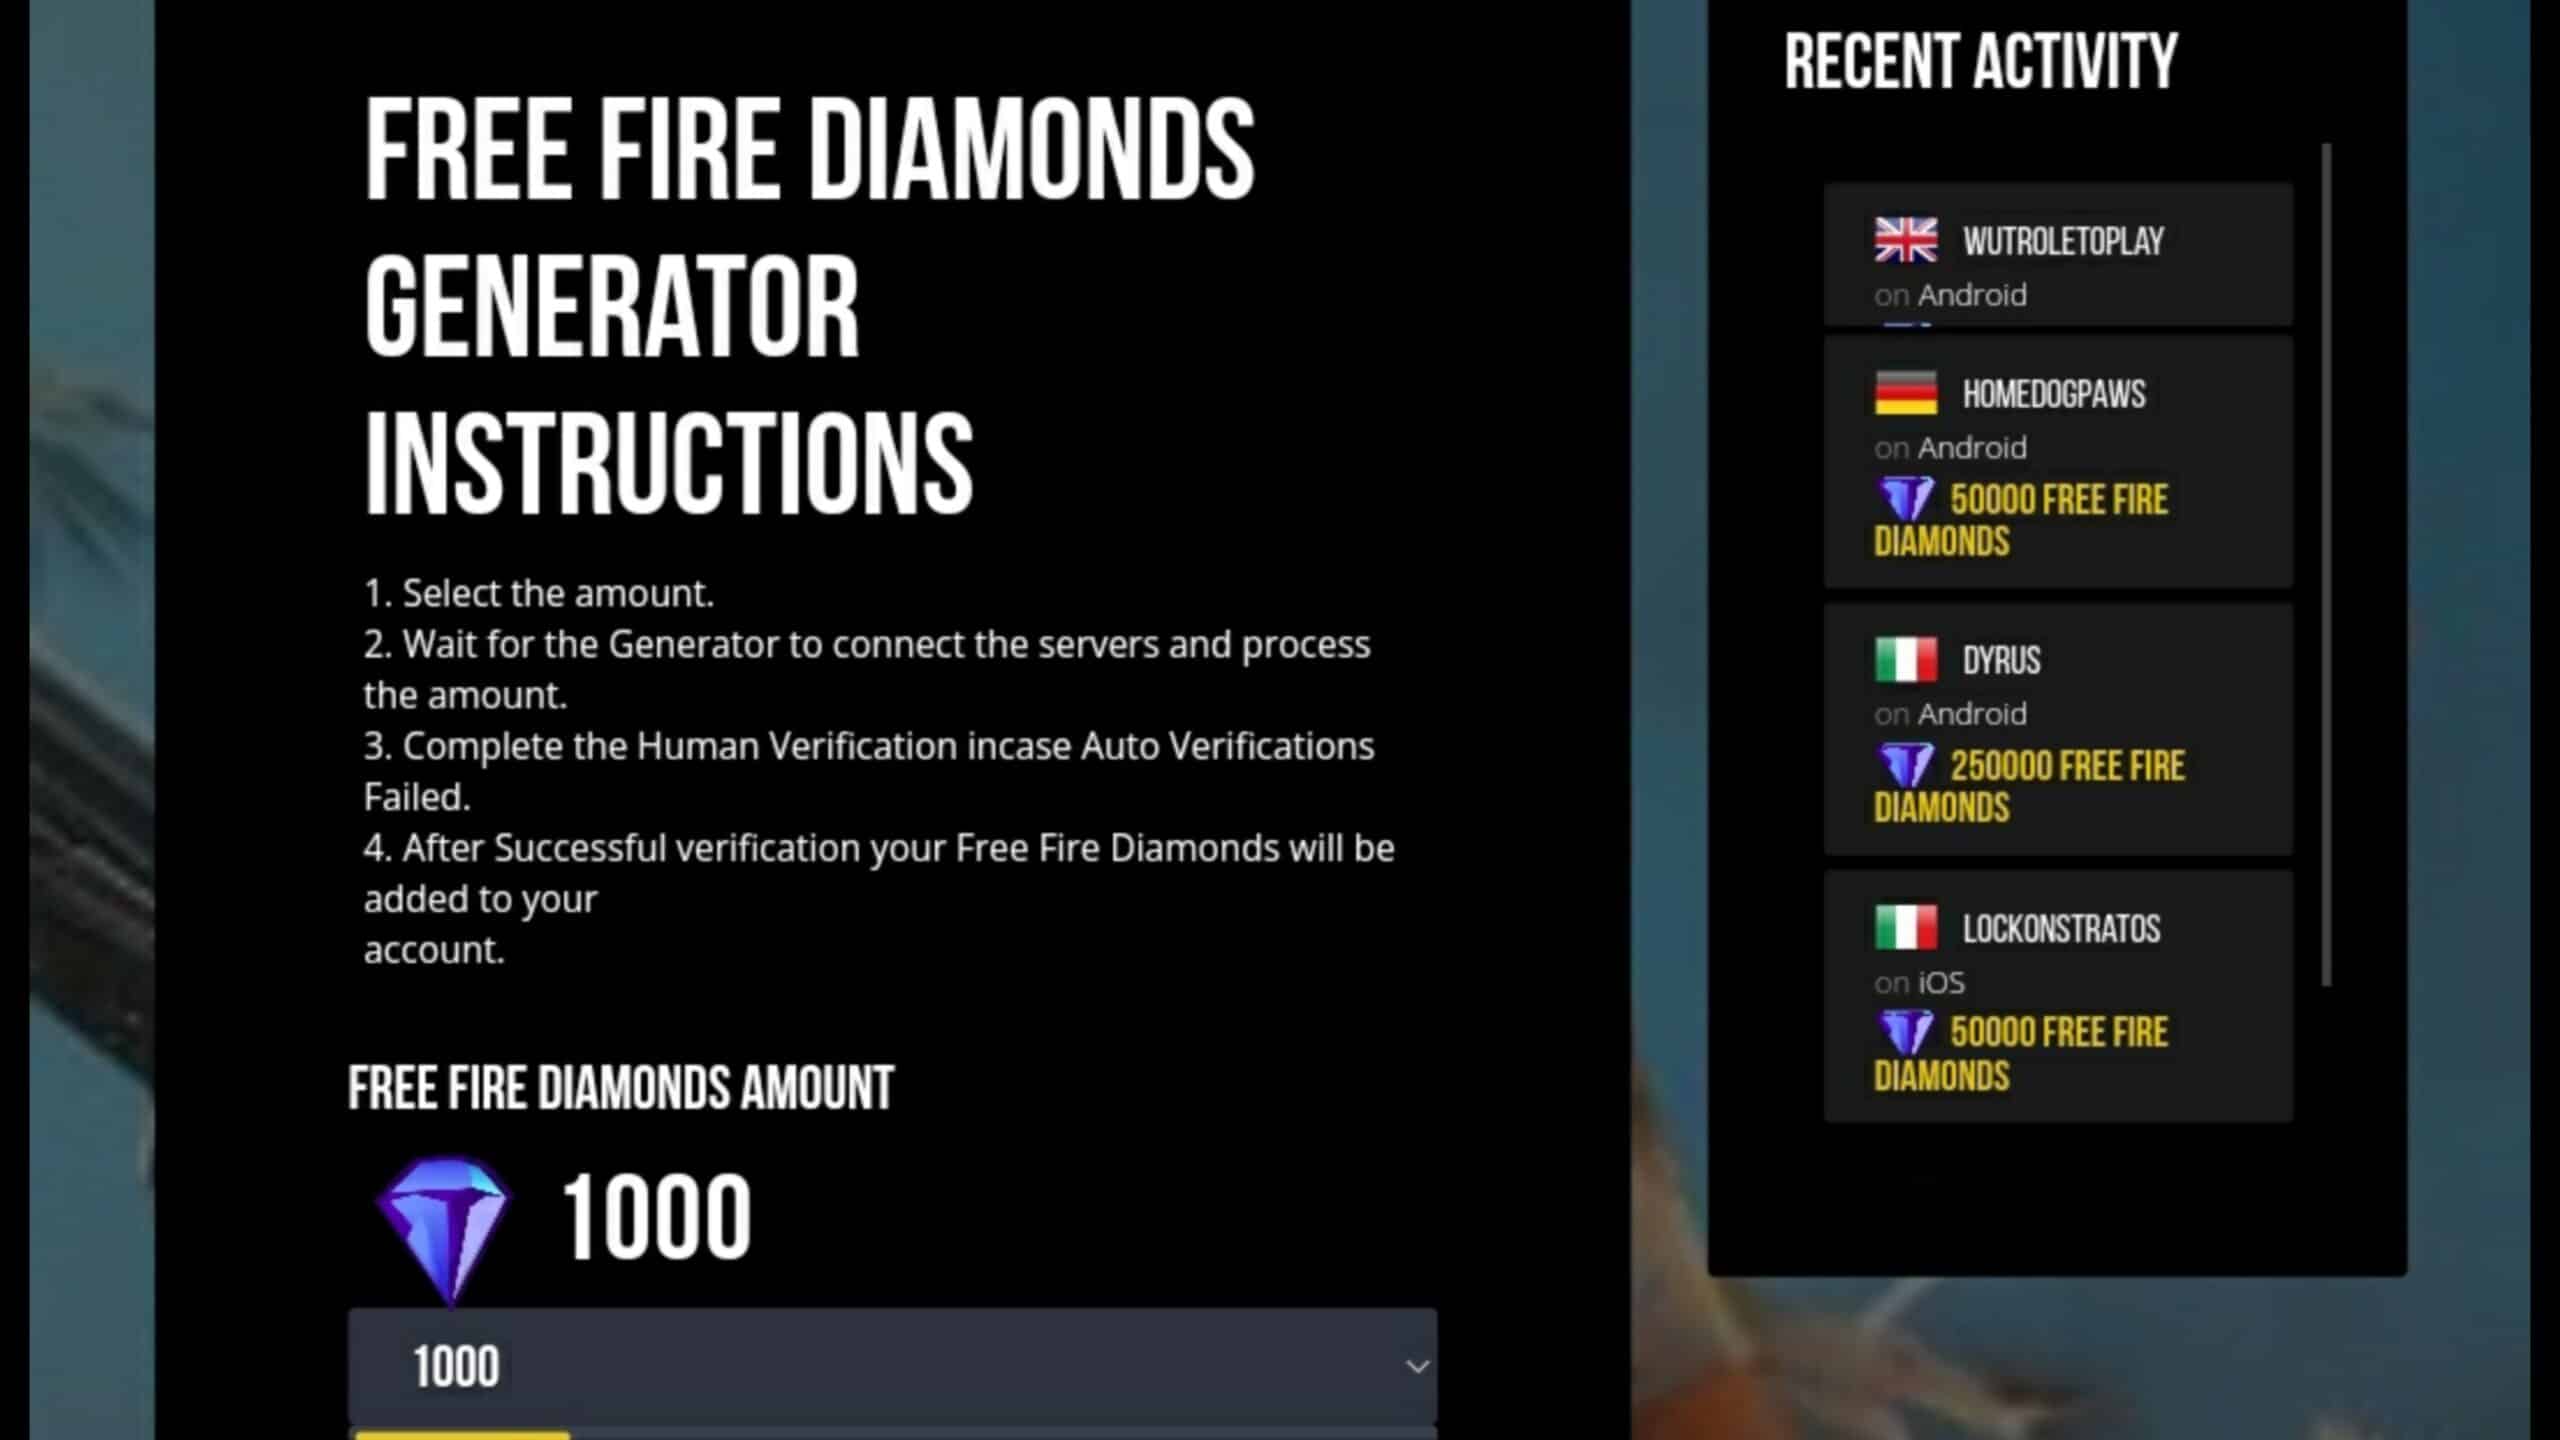 free fire diamond generator instructions